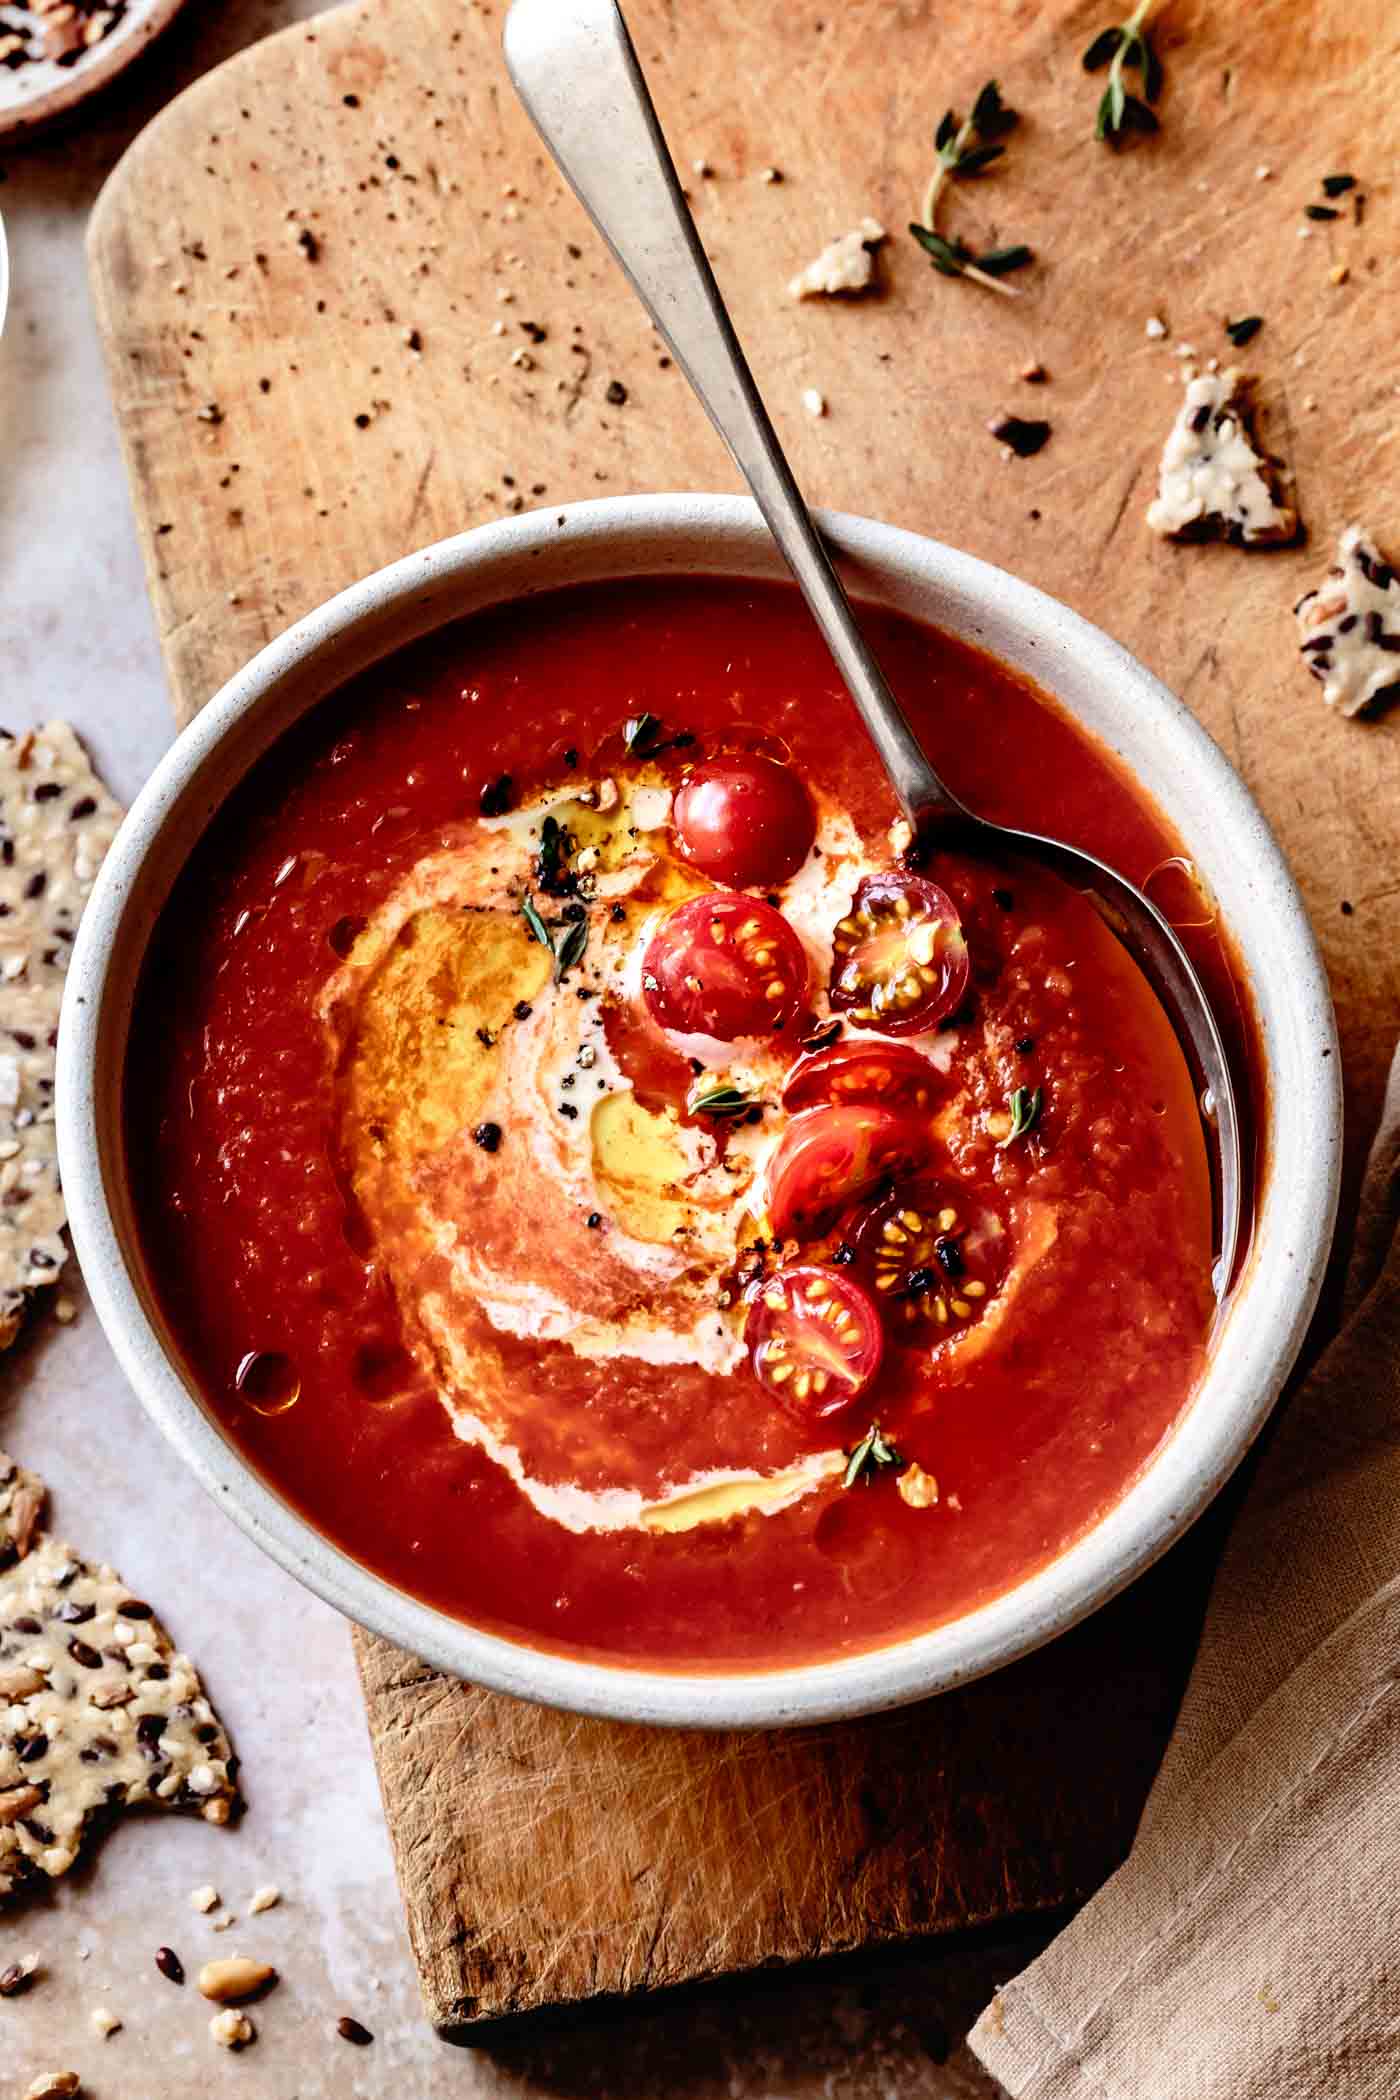 https://bojongourmet.com/wp-content/uploads/2020/09/creamy-vegan-roasted-tomato-soup-recipe-11.jpg